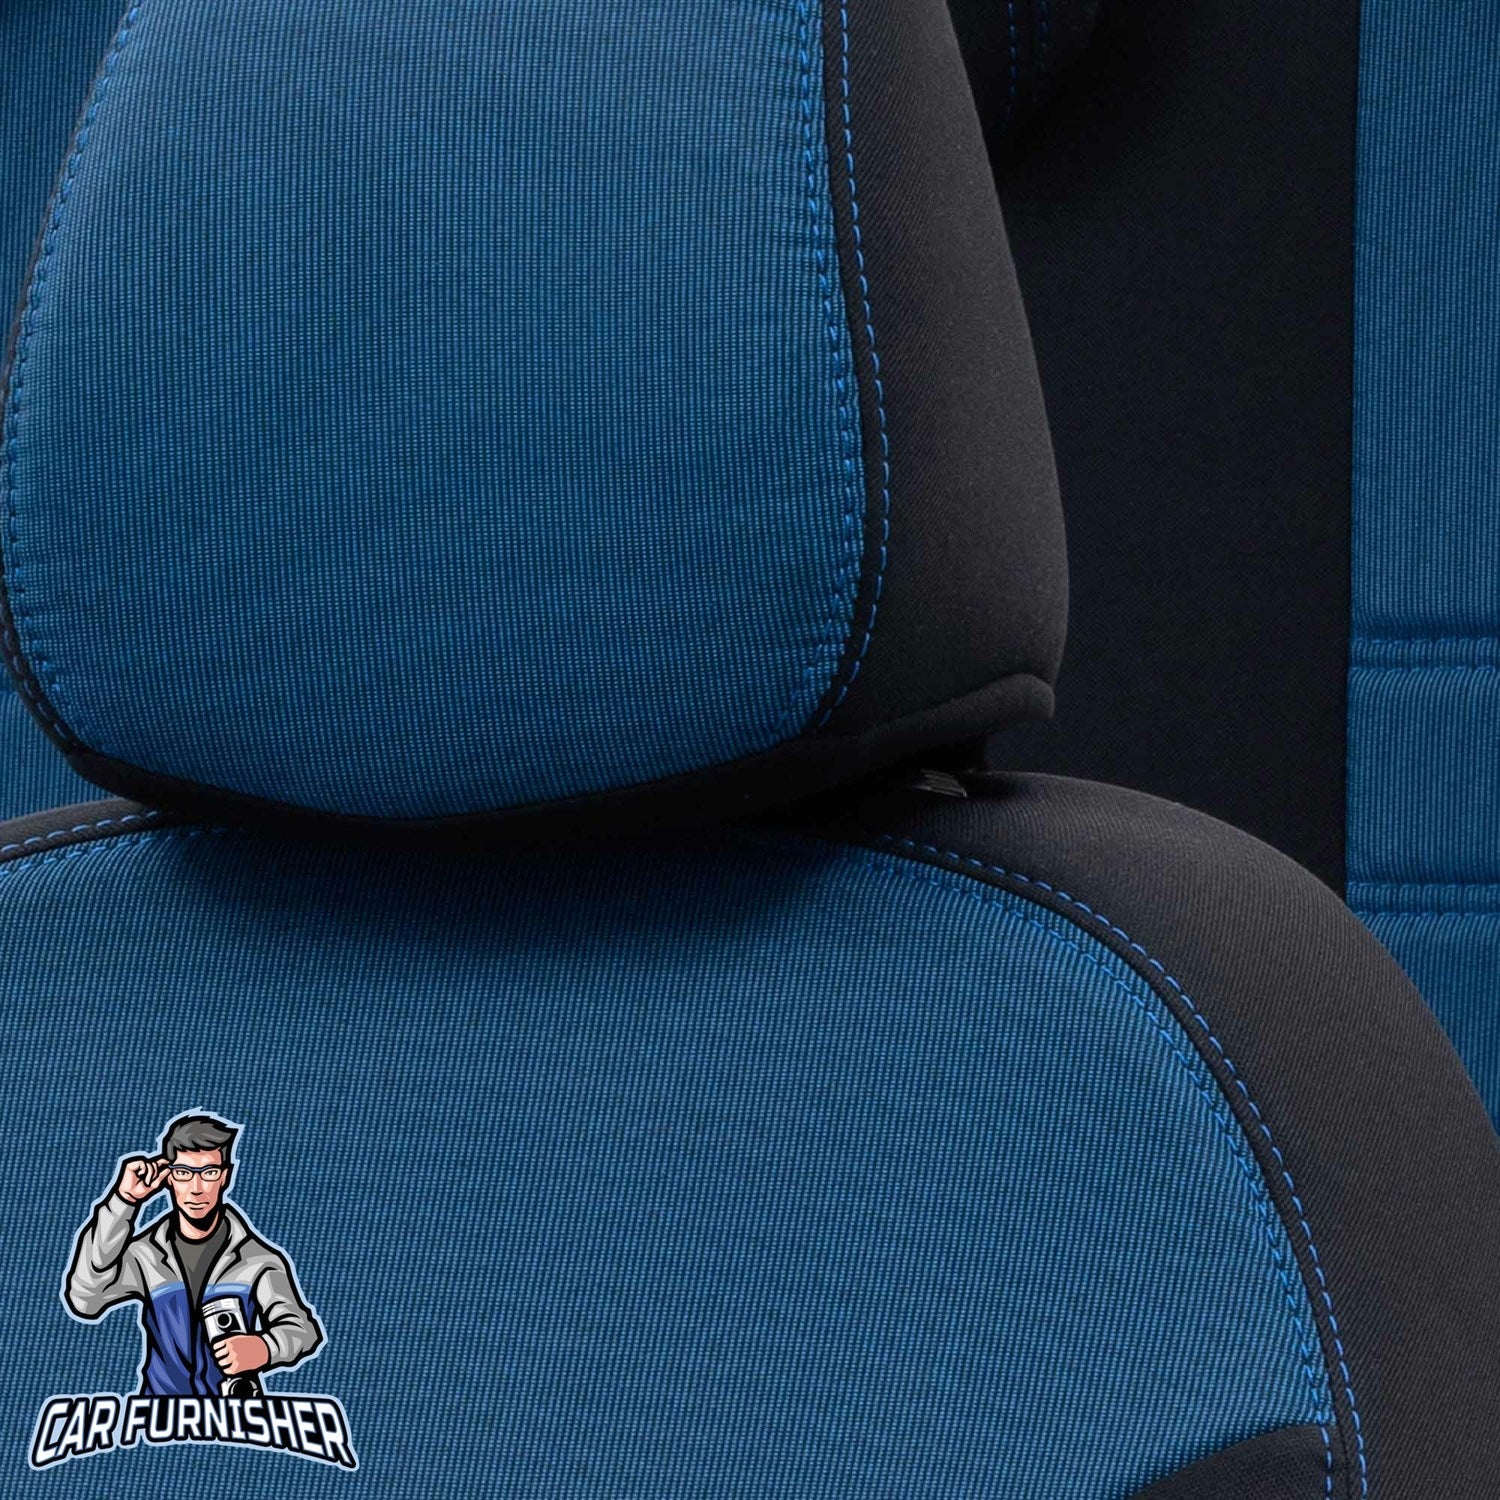 Mercedes S Class Seat Covers Original Jacquard Design Blue Jacquard Fabric